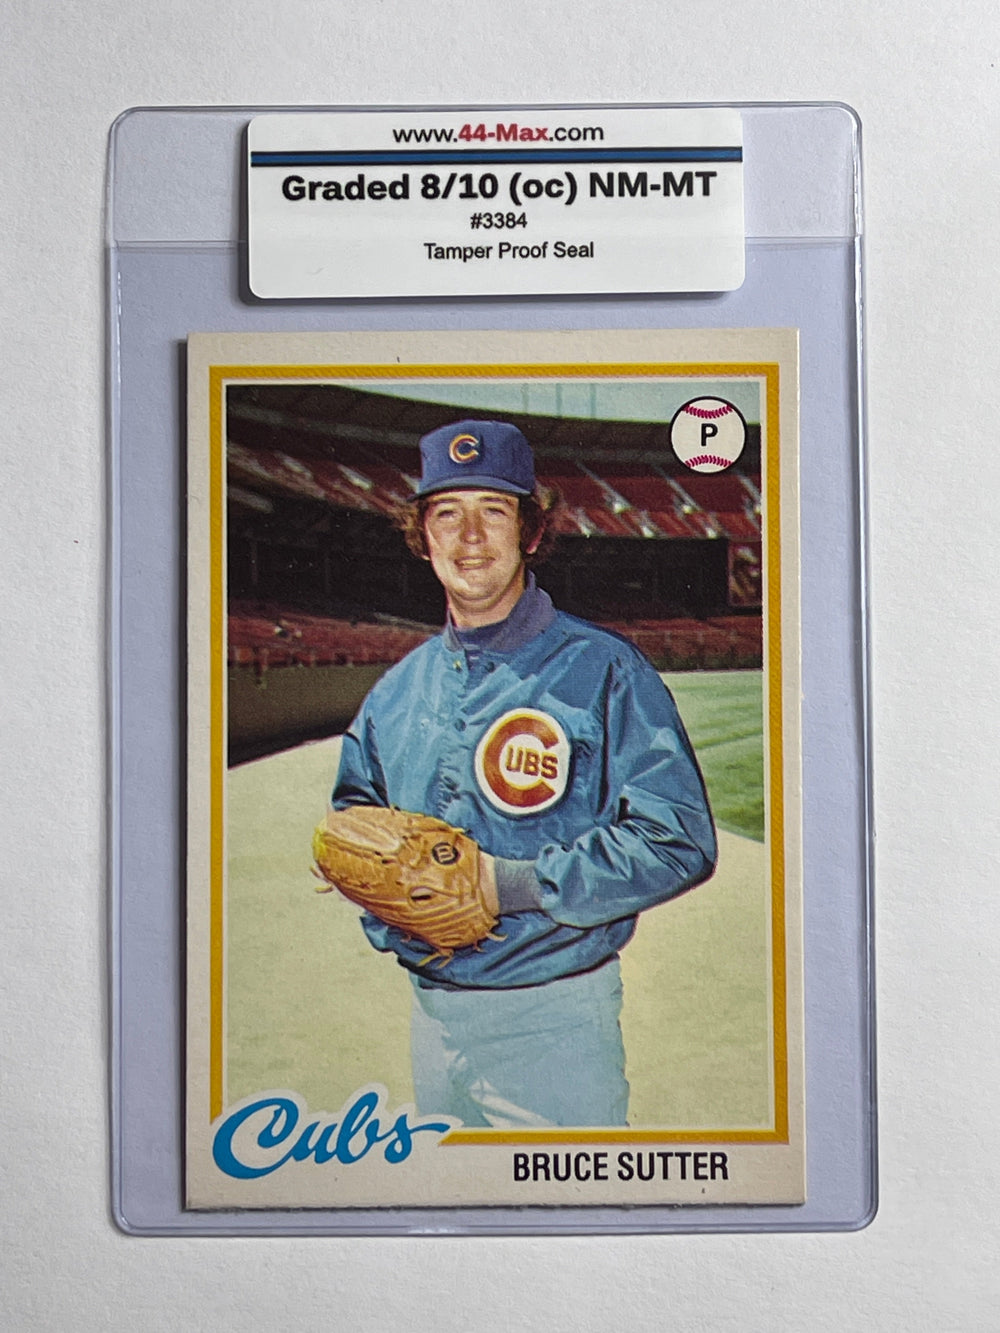 Bruce Sutter 1978 O-Pee-Chee Baseball Card. 44-Max 8/10 (oc) NM-MT #3384